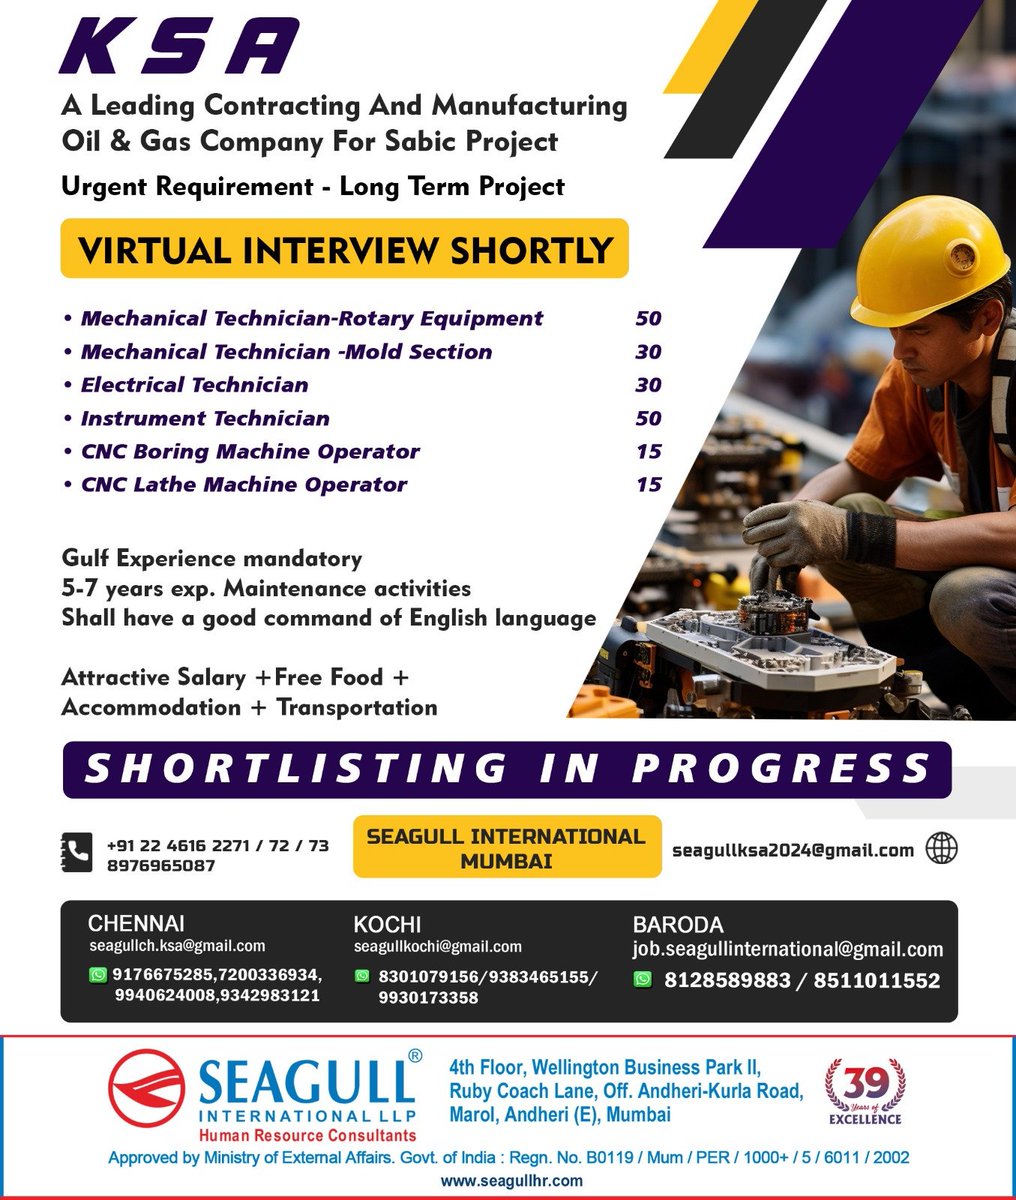 🇸🇦KSA Jobs 
‼️ Urgent Requirement - Long Term Project
💻 Virtual Interview Shortly
📝Shortlisting In Progress
📍Location - Mumbai , Chennai , Kochi & Baroda
.
.
.
#ksajobs #seagull #mechanicaltechnicianrotaryequipment #mechanicaltechnicianmoldsection